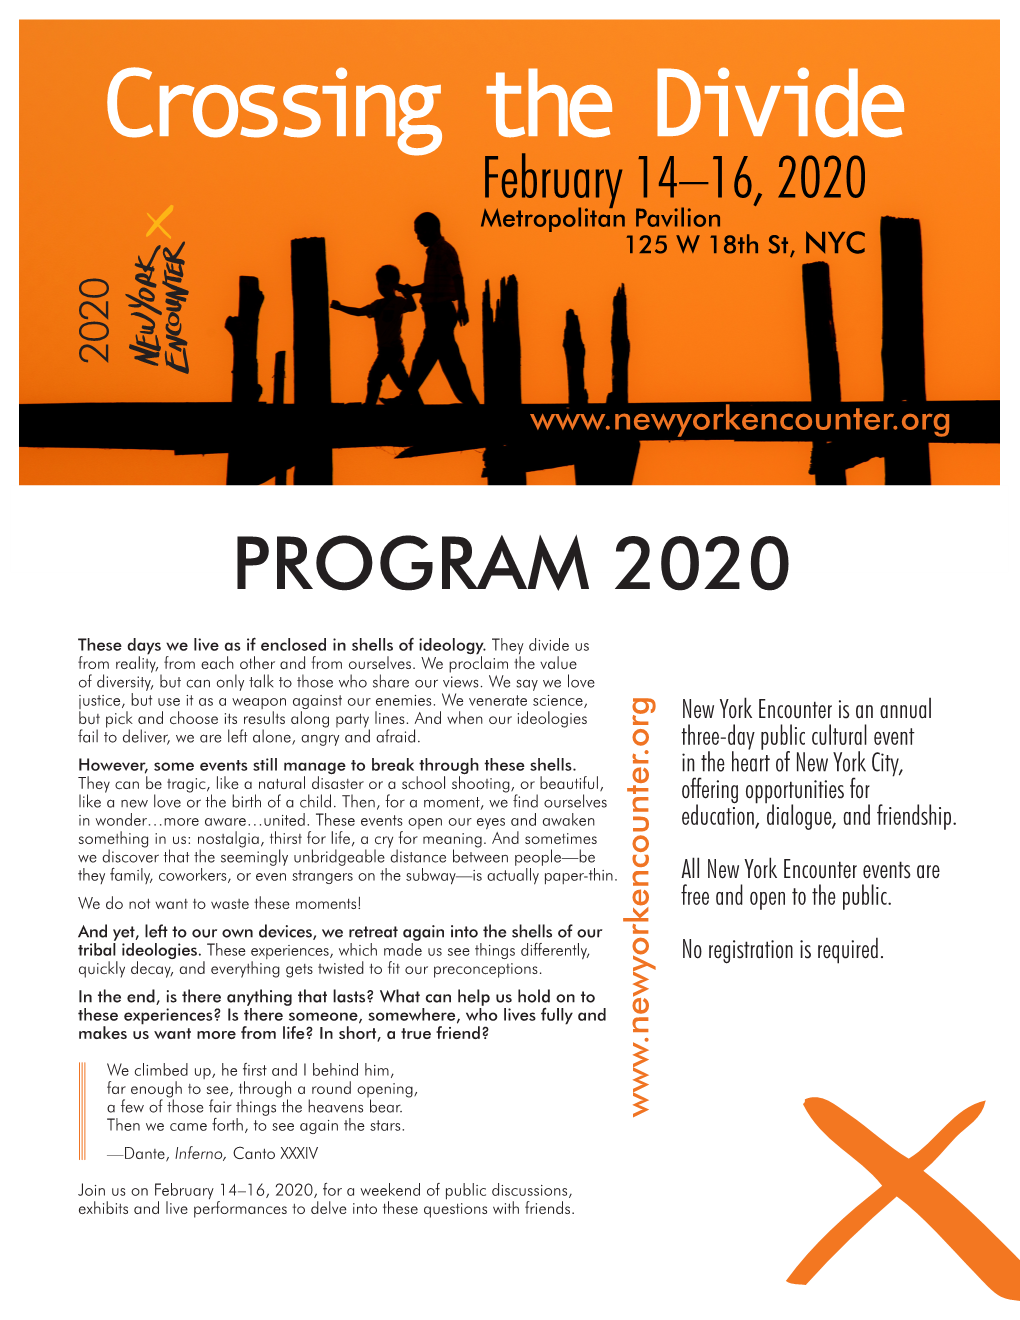 Program 2020